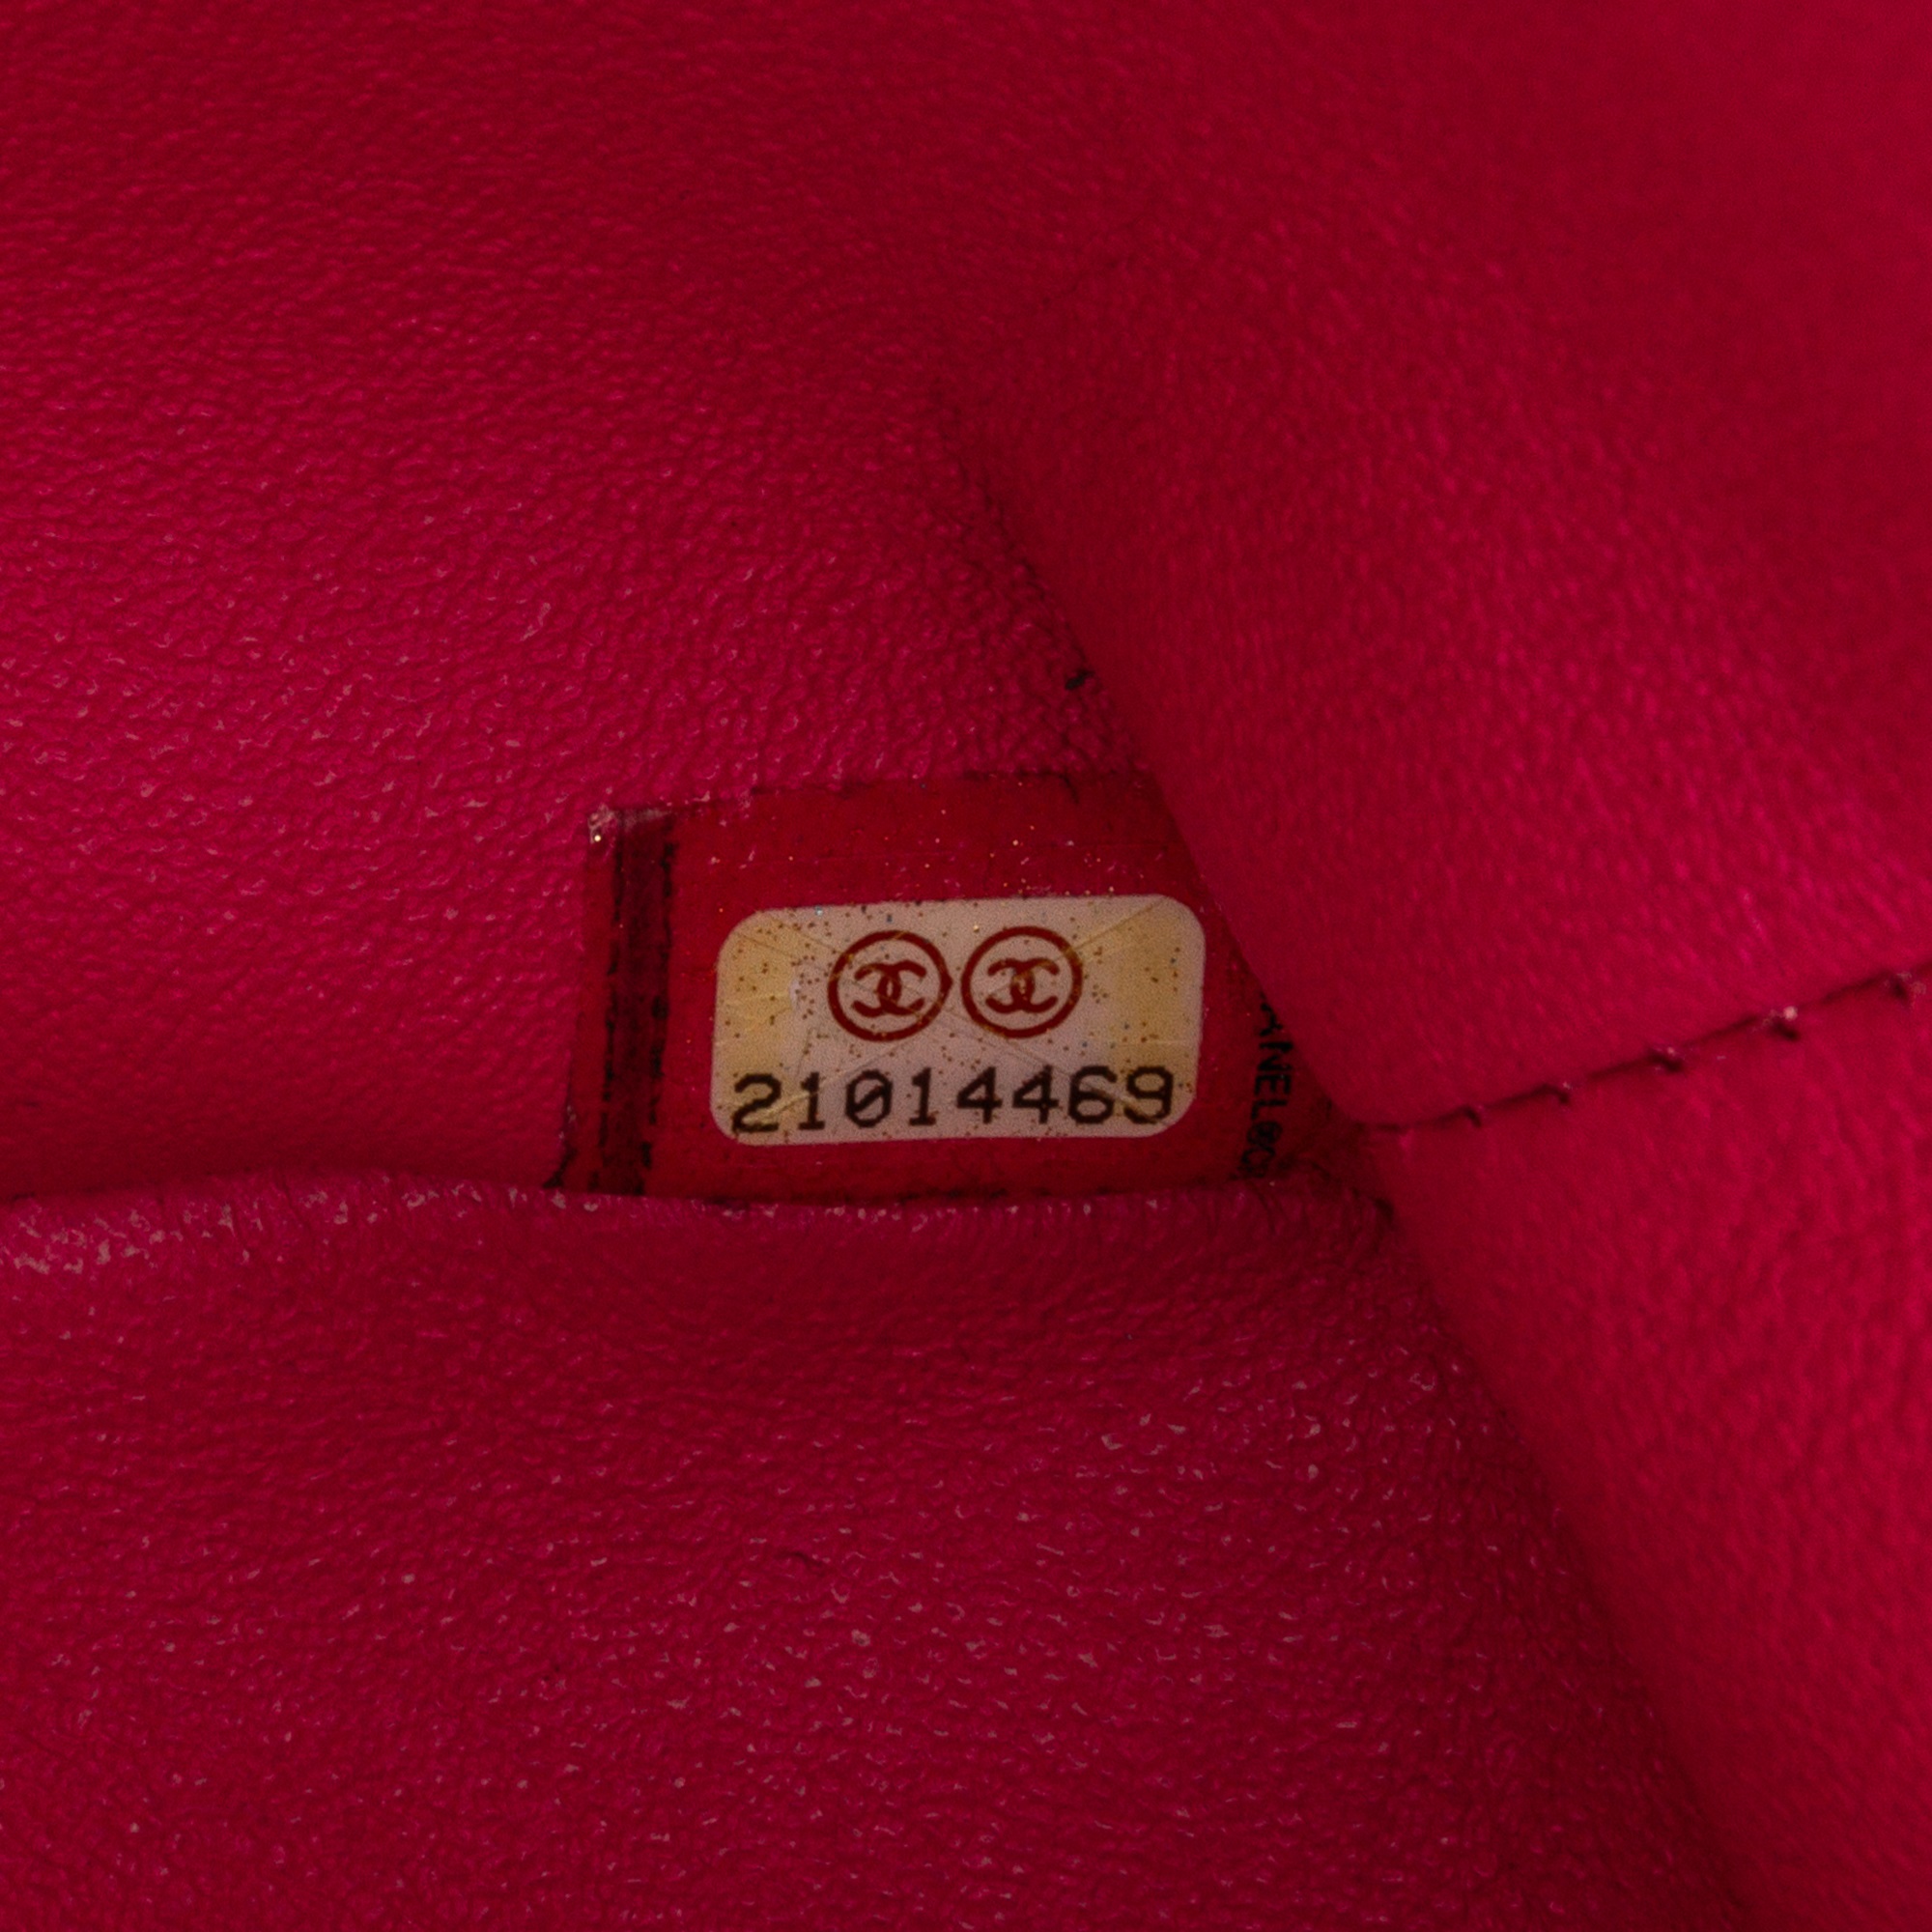 Chanel Pink Mini Chevron Classic Flap